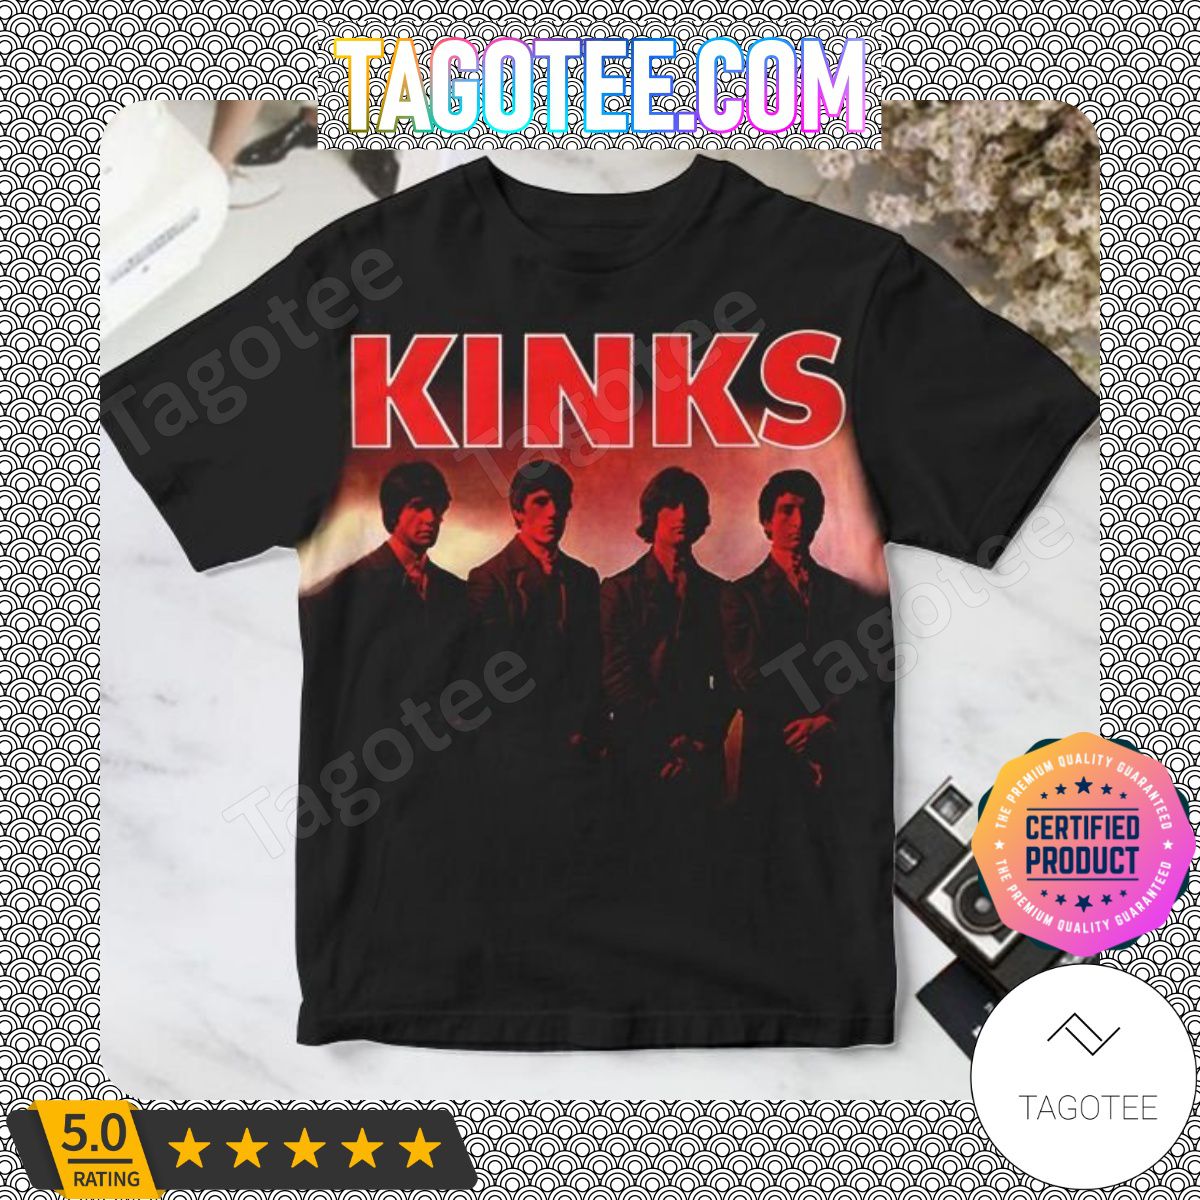 Kinks Album By The Kinks Black For Fan Shirt